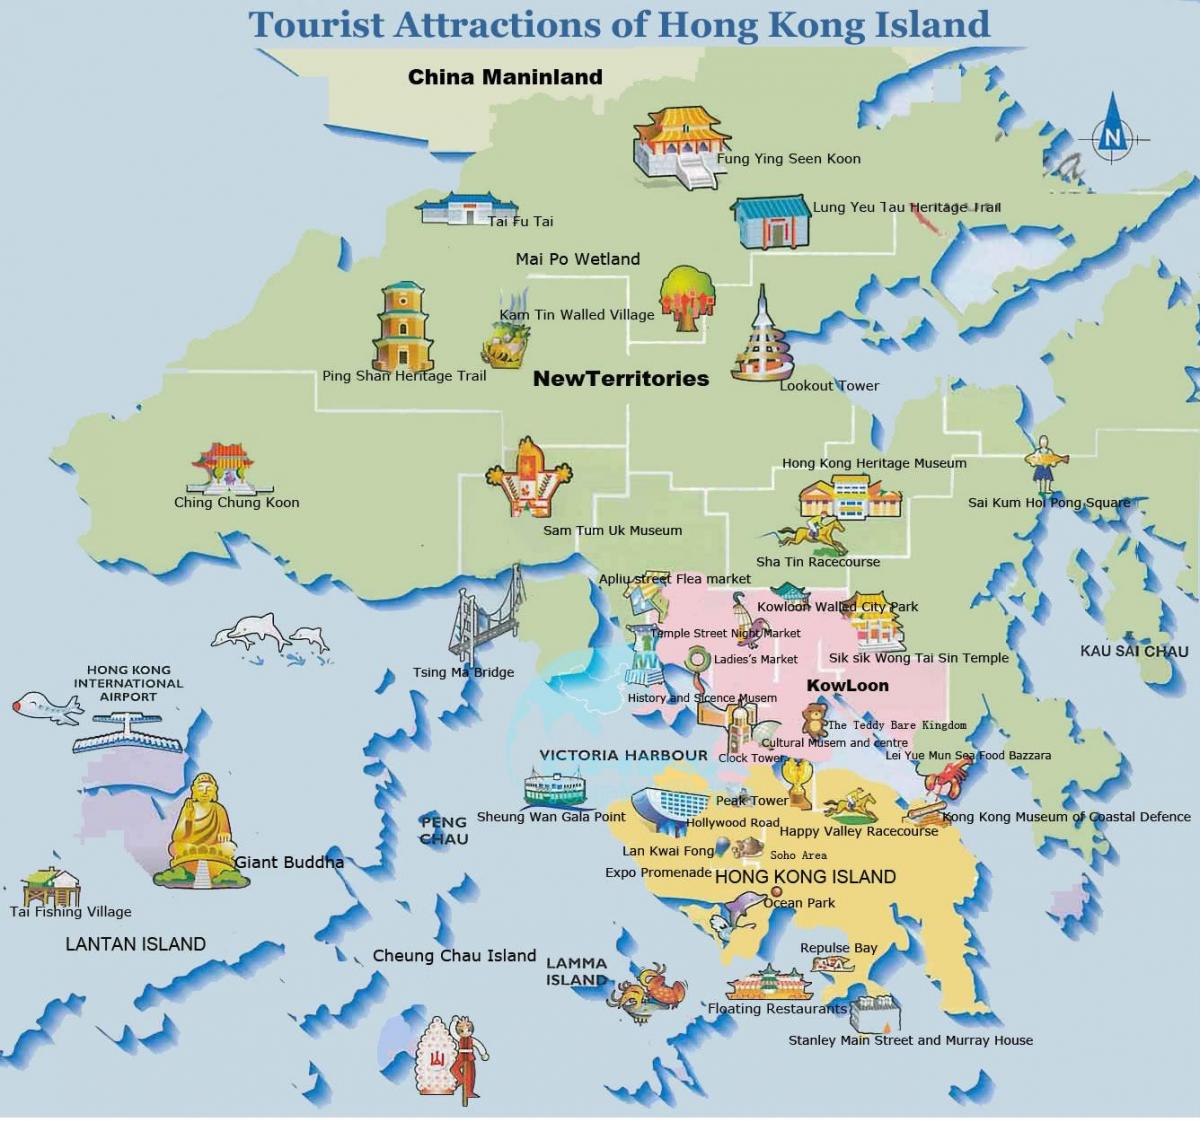 мапа острва Хонг конг